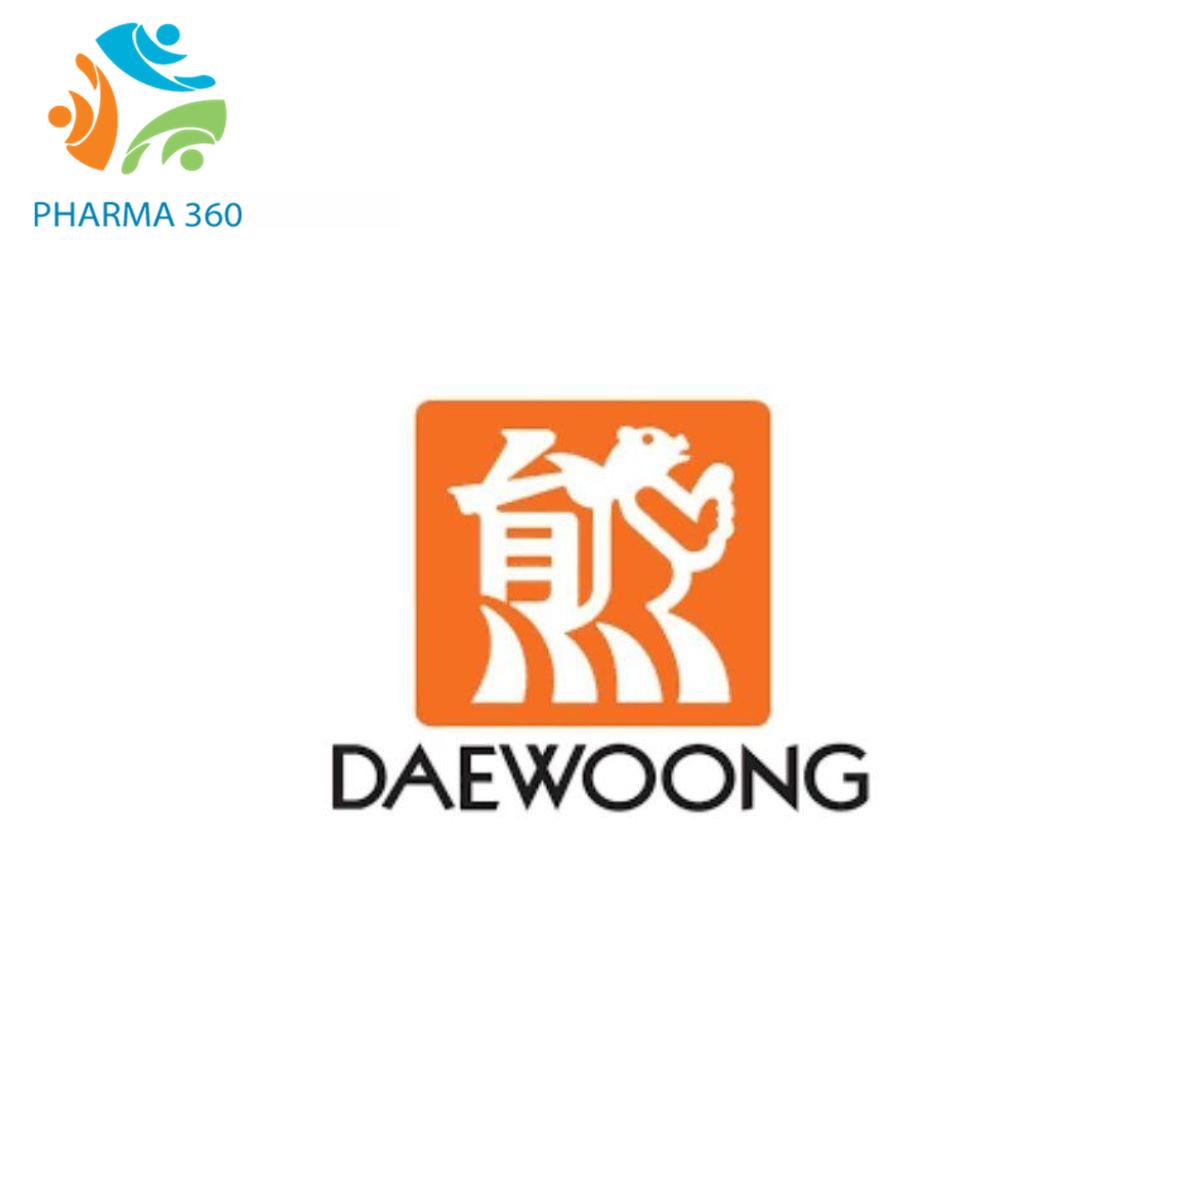 Daewoong Pharmaceutical Co., ltd